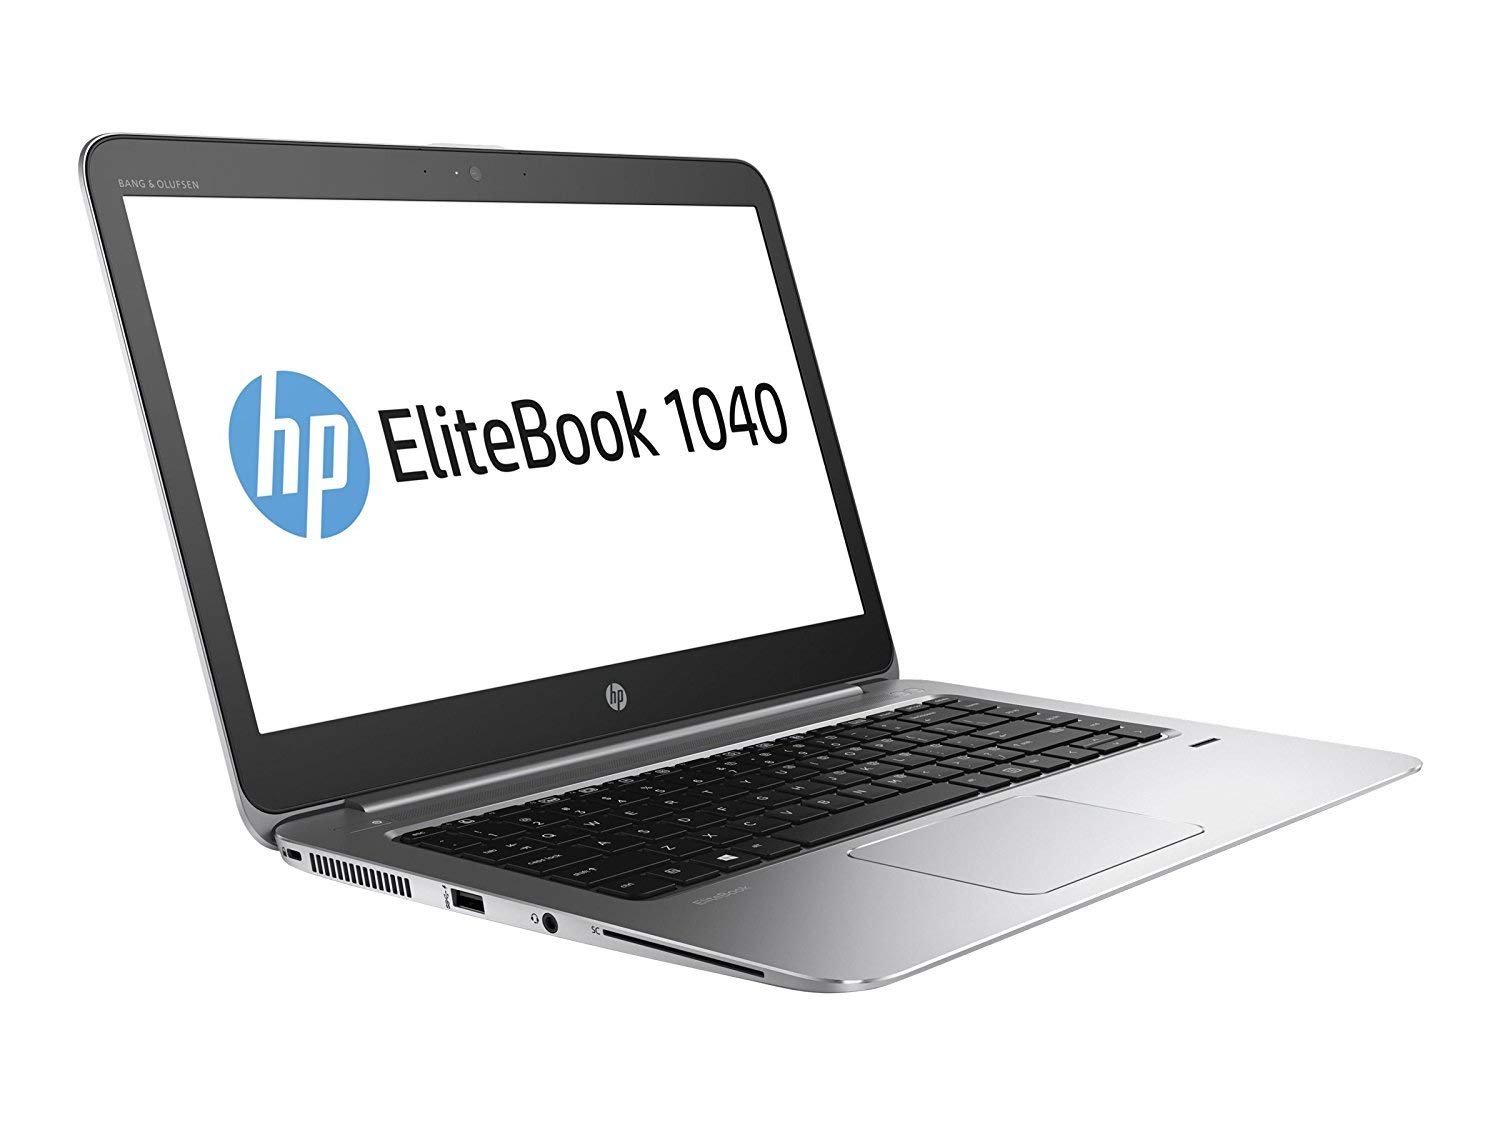 HP Elitebook Folio 1040 G3 | 14 FHD Display / Intel Core i7-6600U 2.6Ghz / 8GB / 256GB SSD / Fingerprint Scanner / Webcam / HDMI / Windows 10 Pro (Renewed)